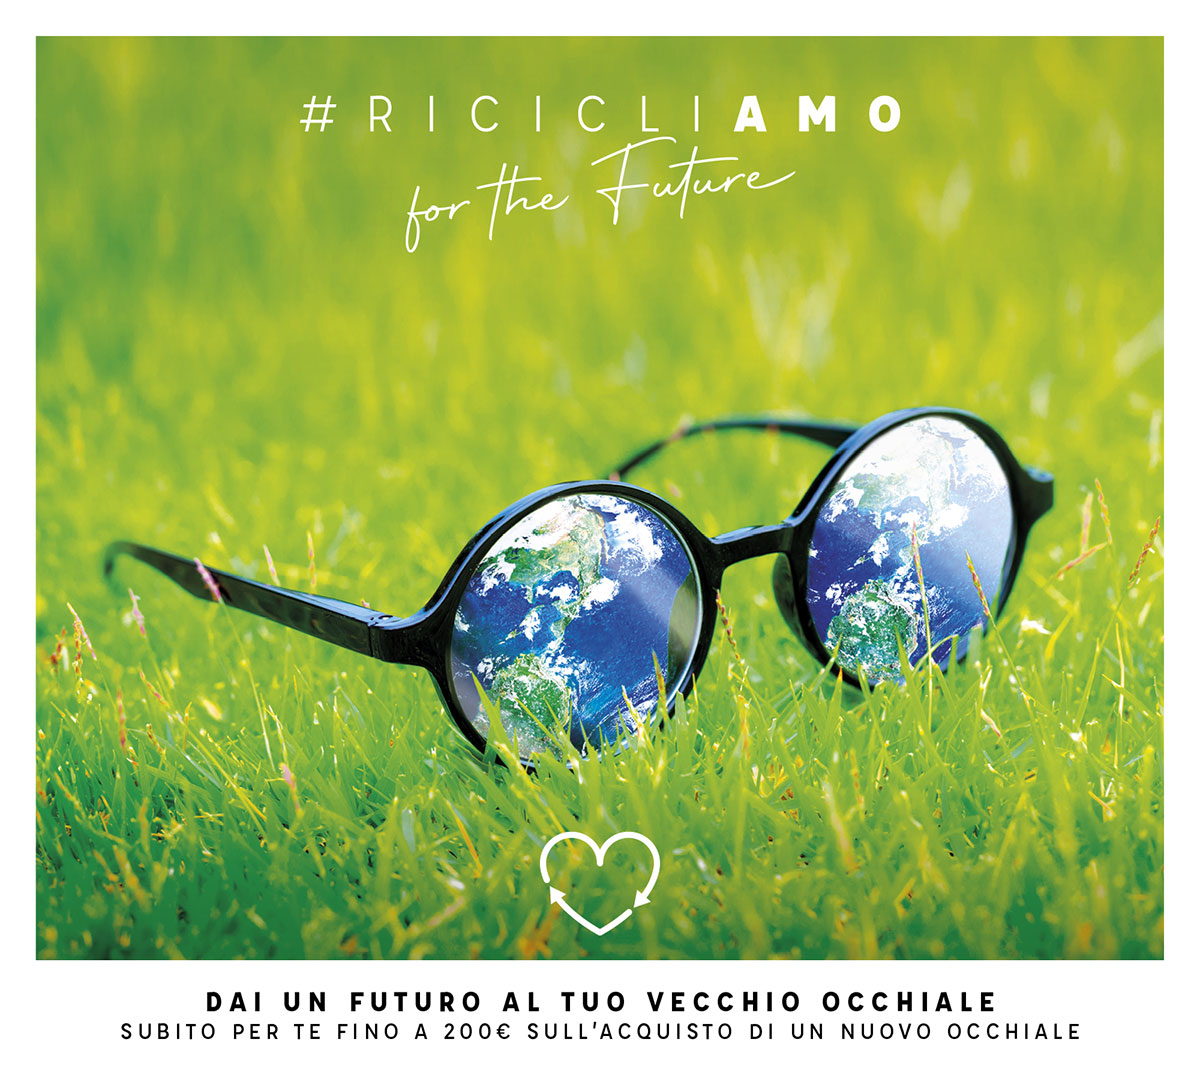 RicicliAMO for the future - PROMO Forlini Optical